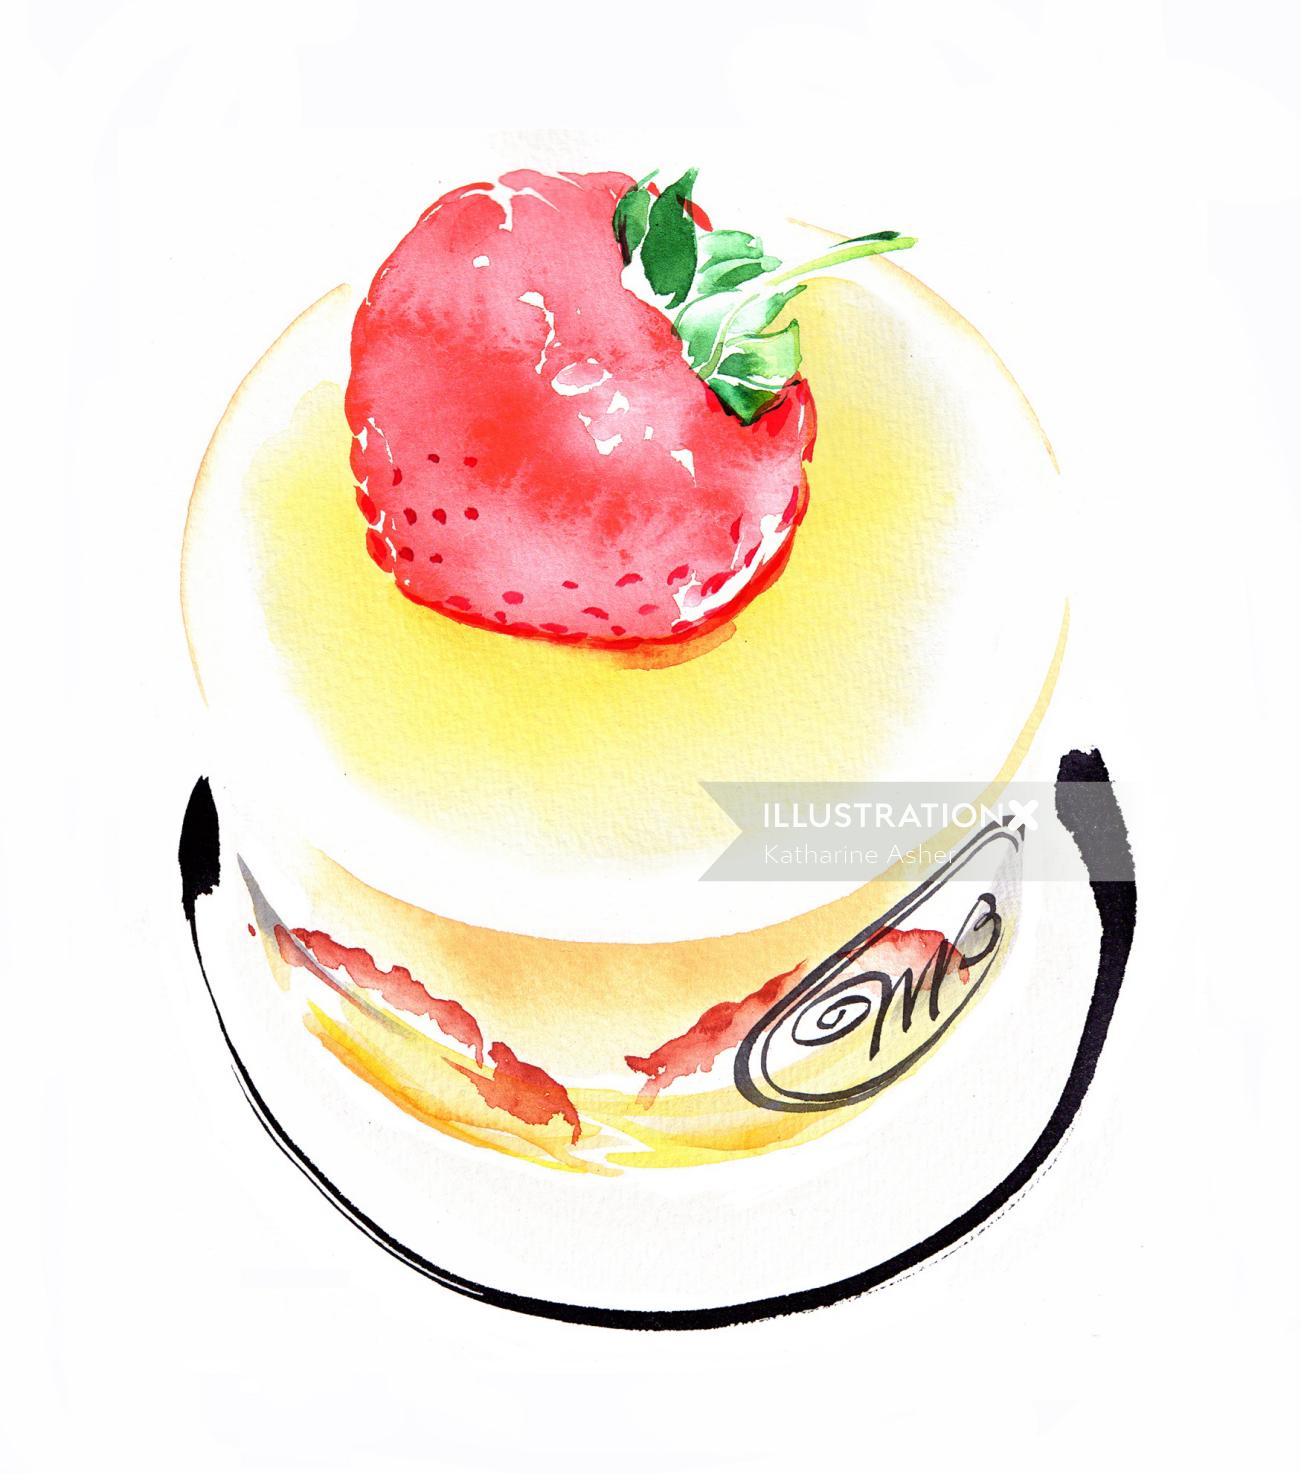 Cake illustration by Katharine Asher